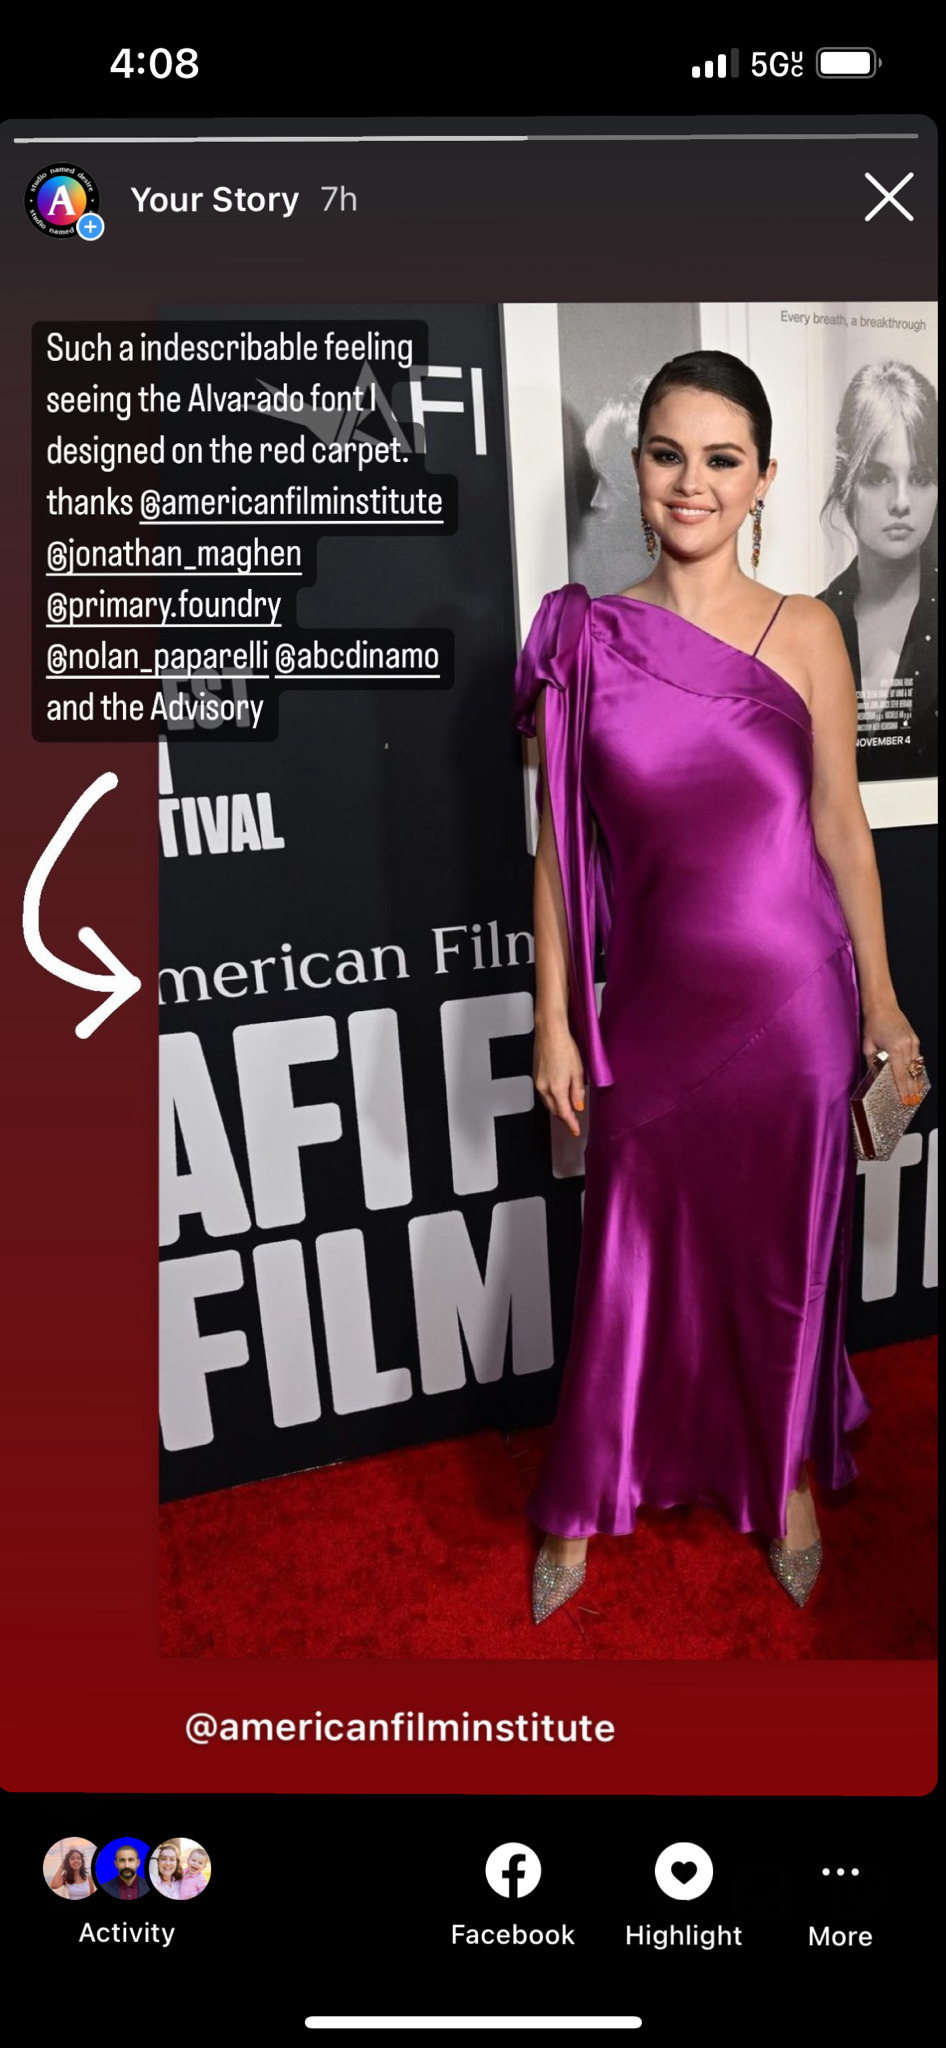 AFI Film Fest with Selena G